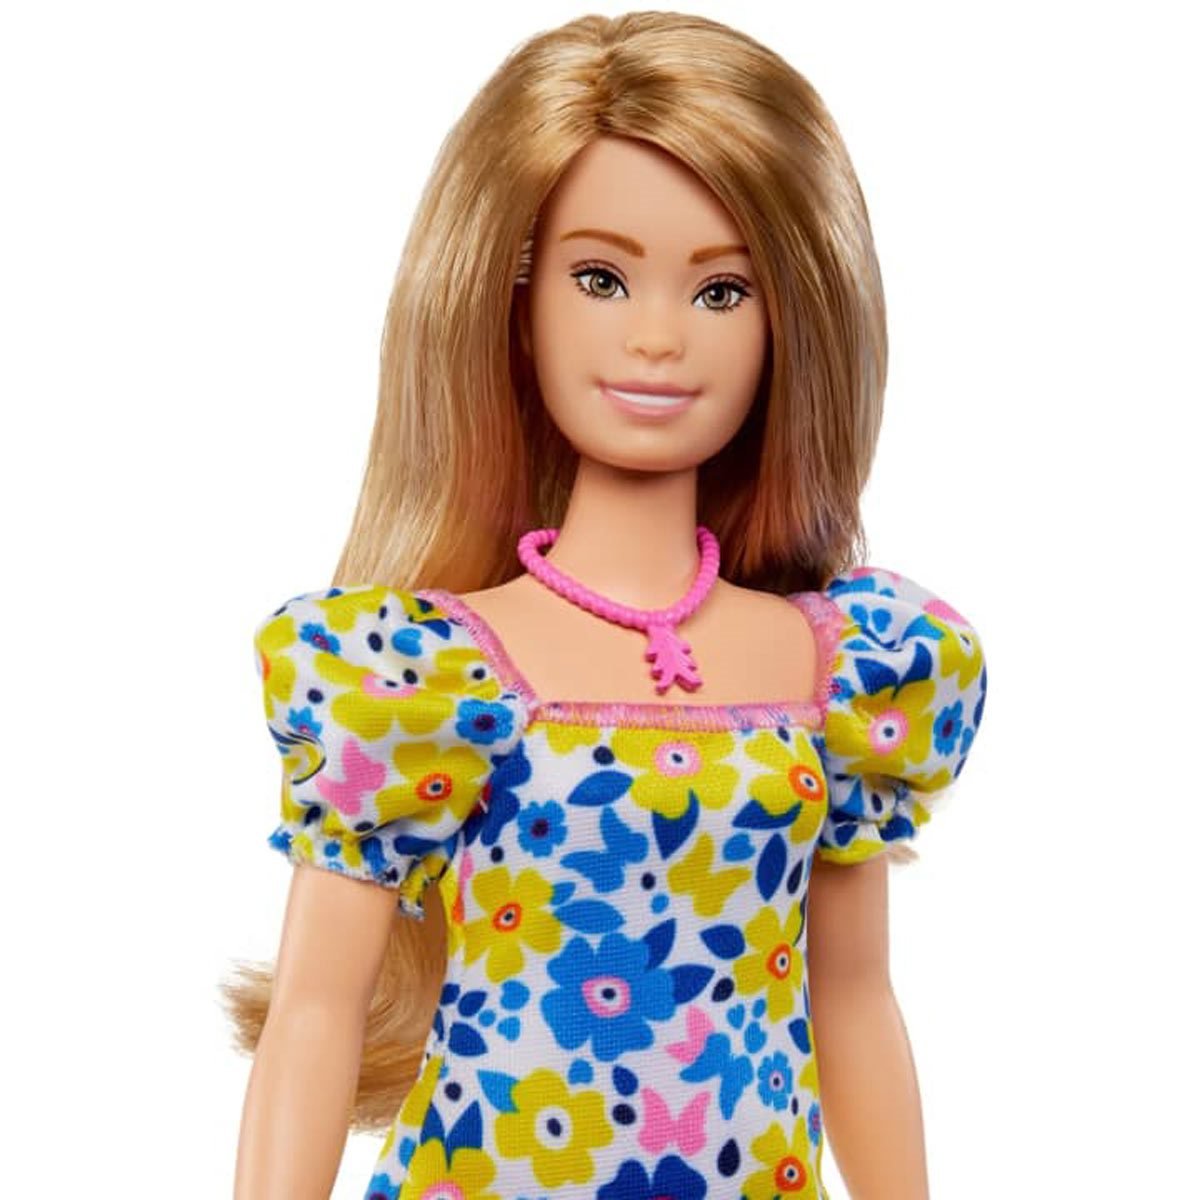 Barbie Fashionistas Barbie Doll - Blue Dress by Mattel